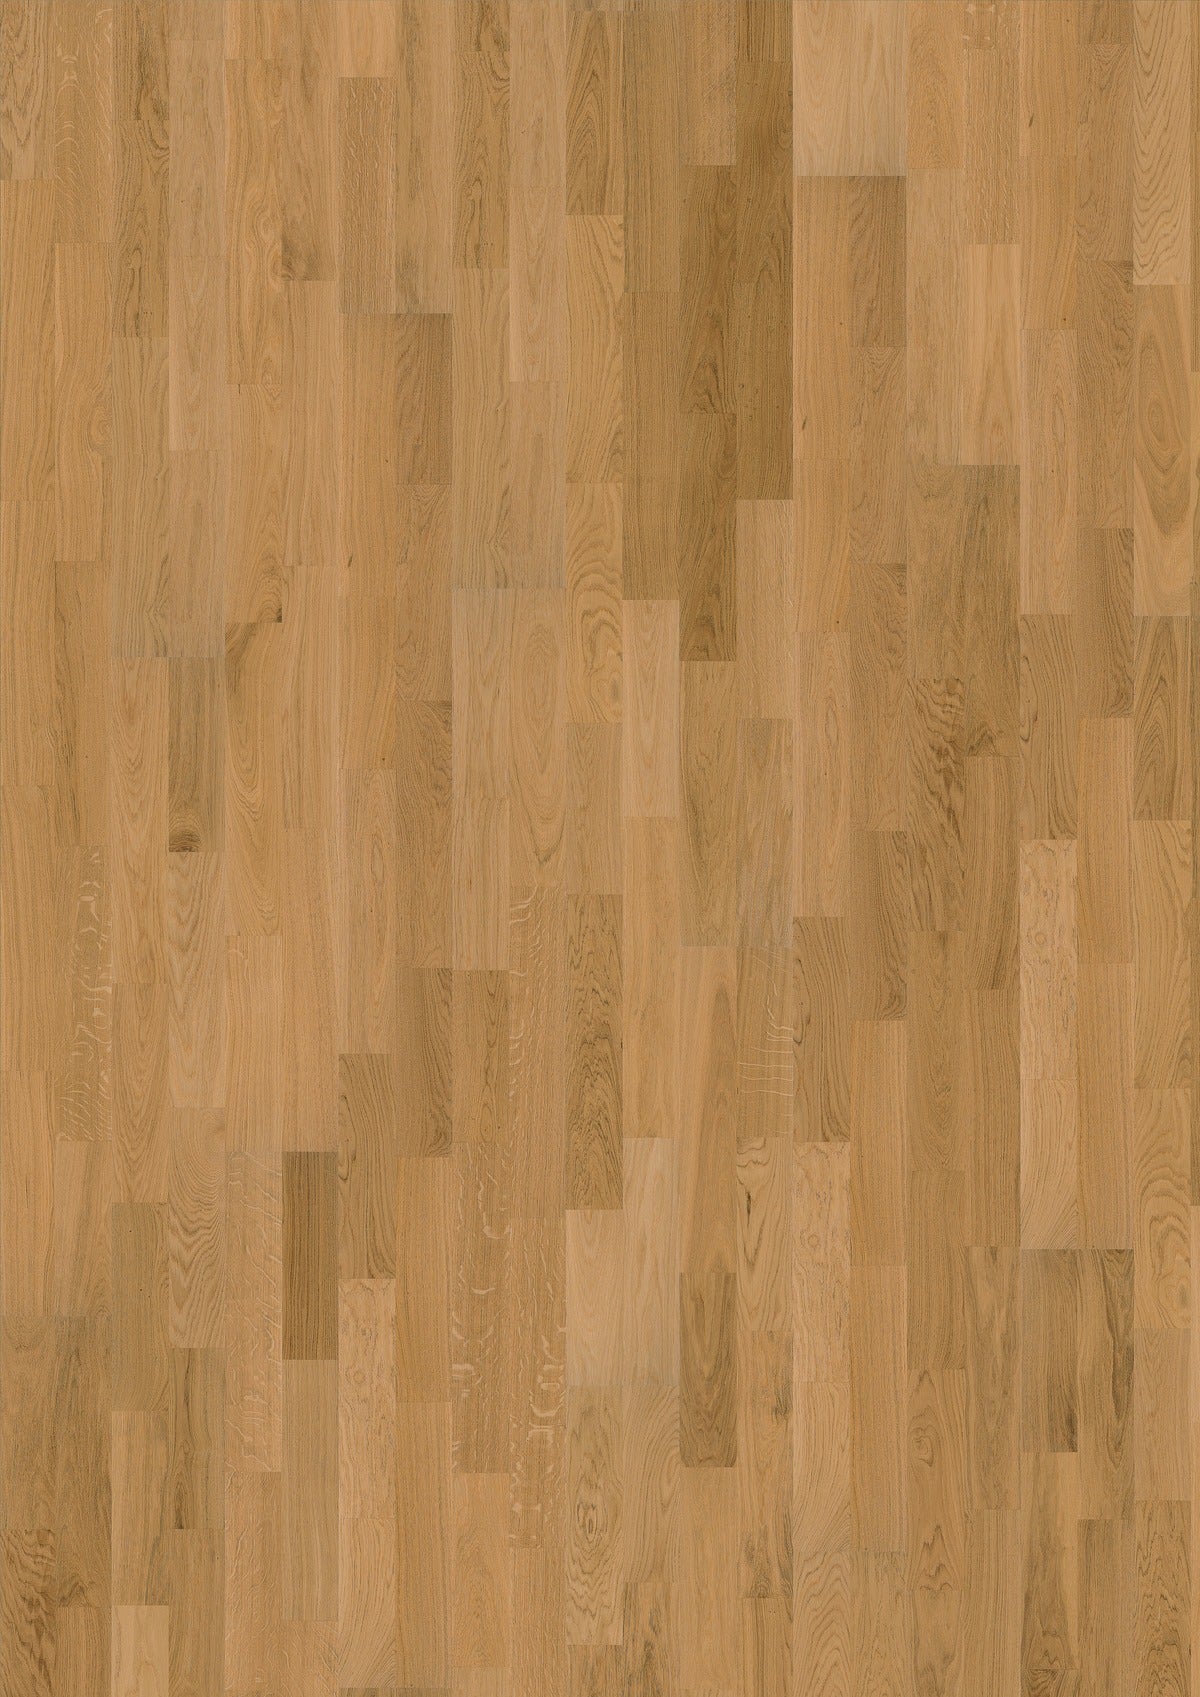 Stuga Engineered hardwood flooring from Sweden.